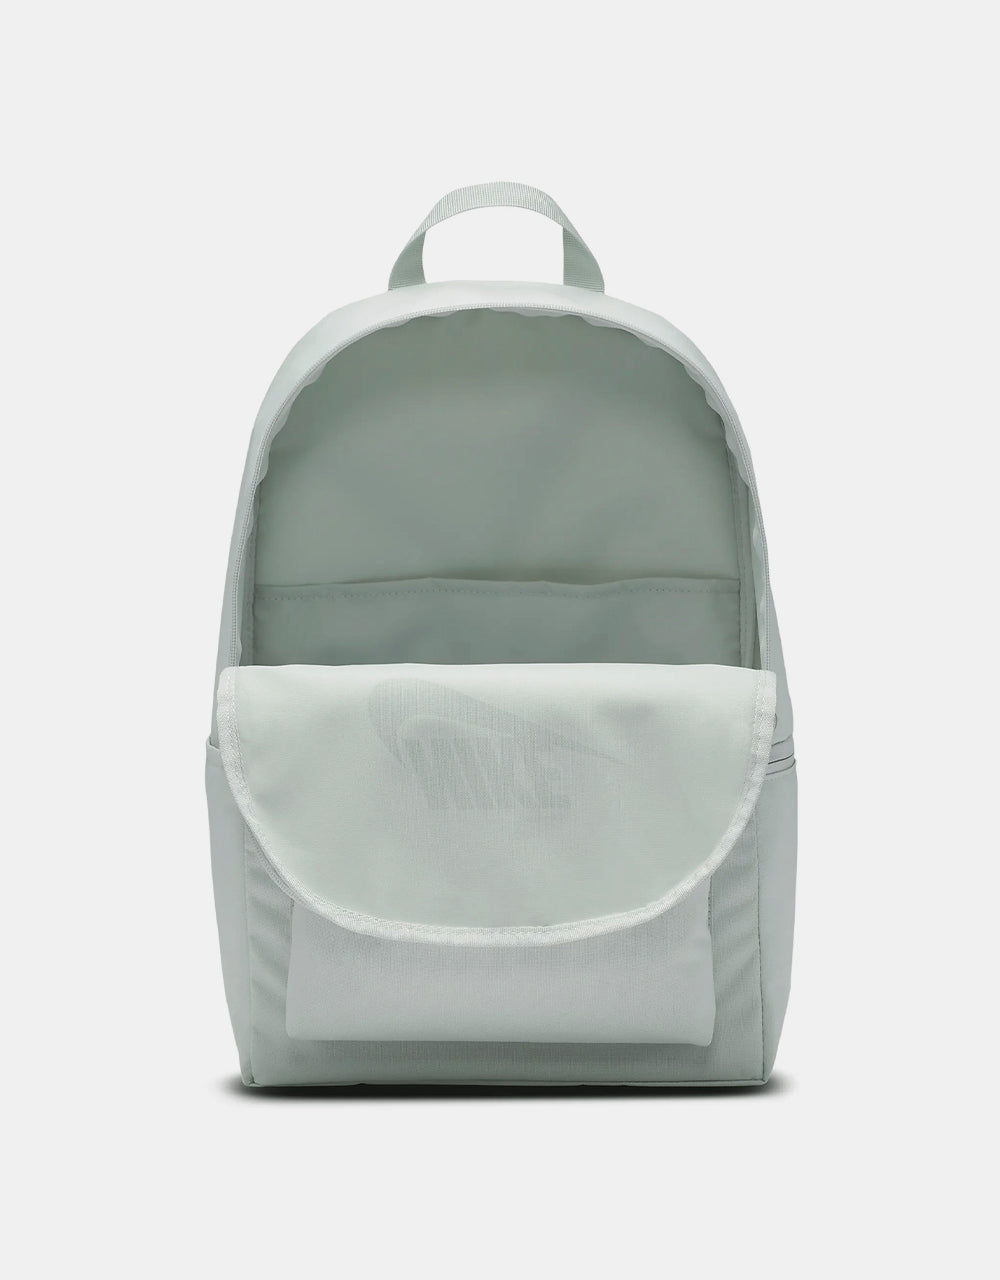 Nike Heritage Backpack - Light Silver/Light Silver/Smoke Grey